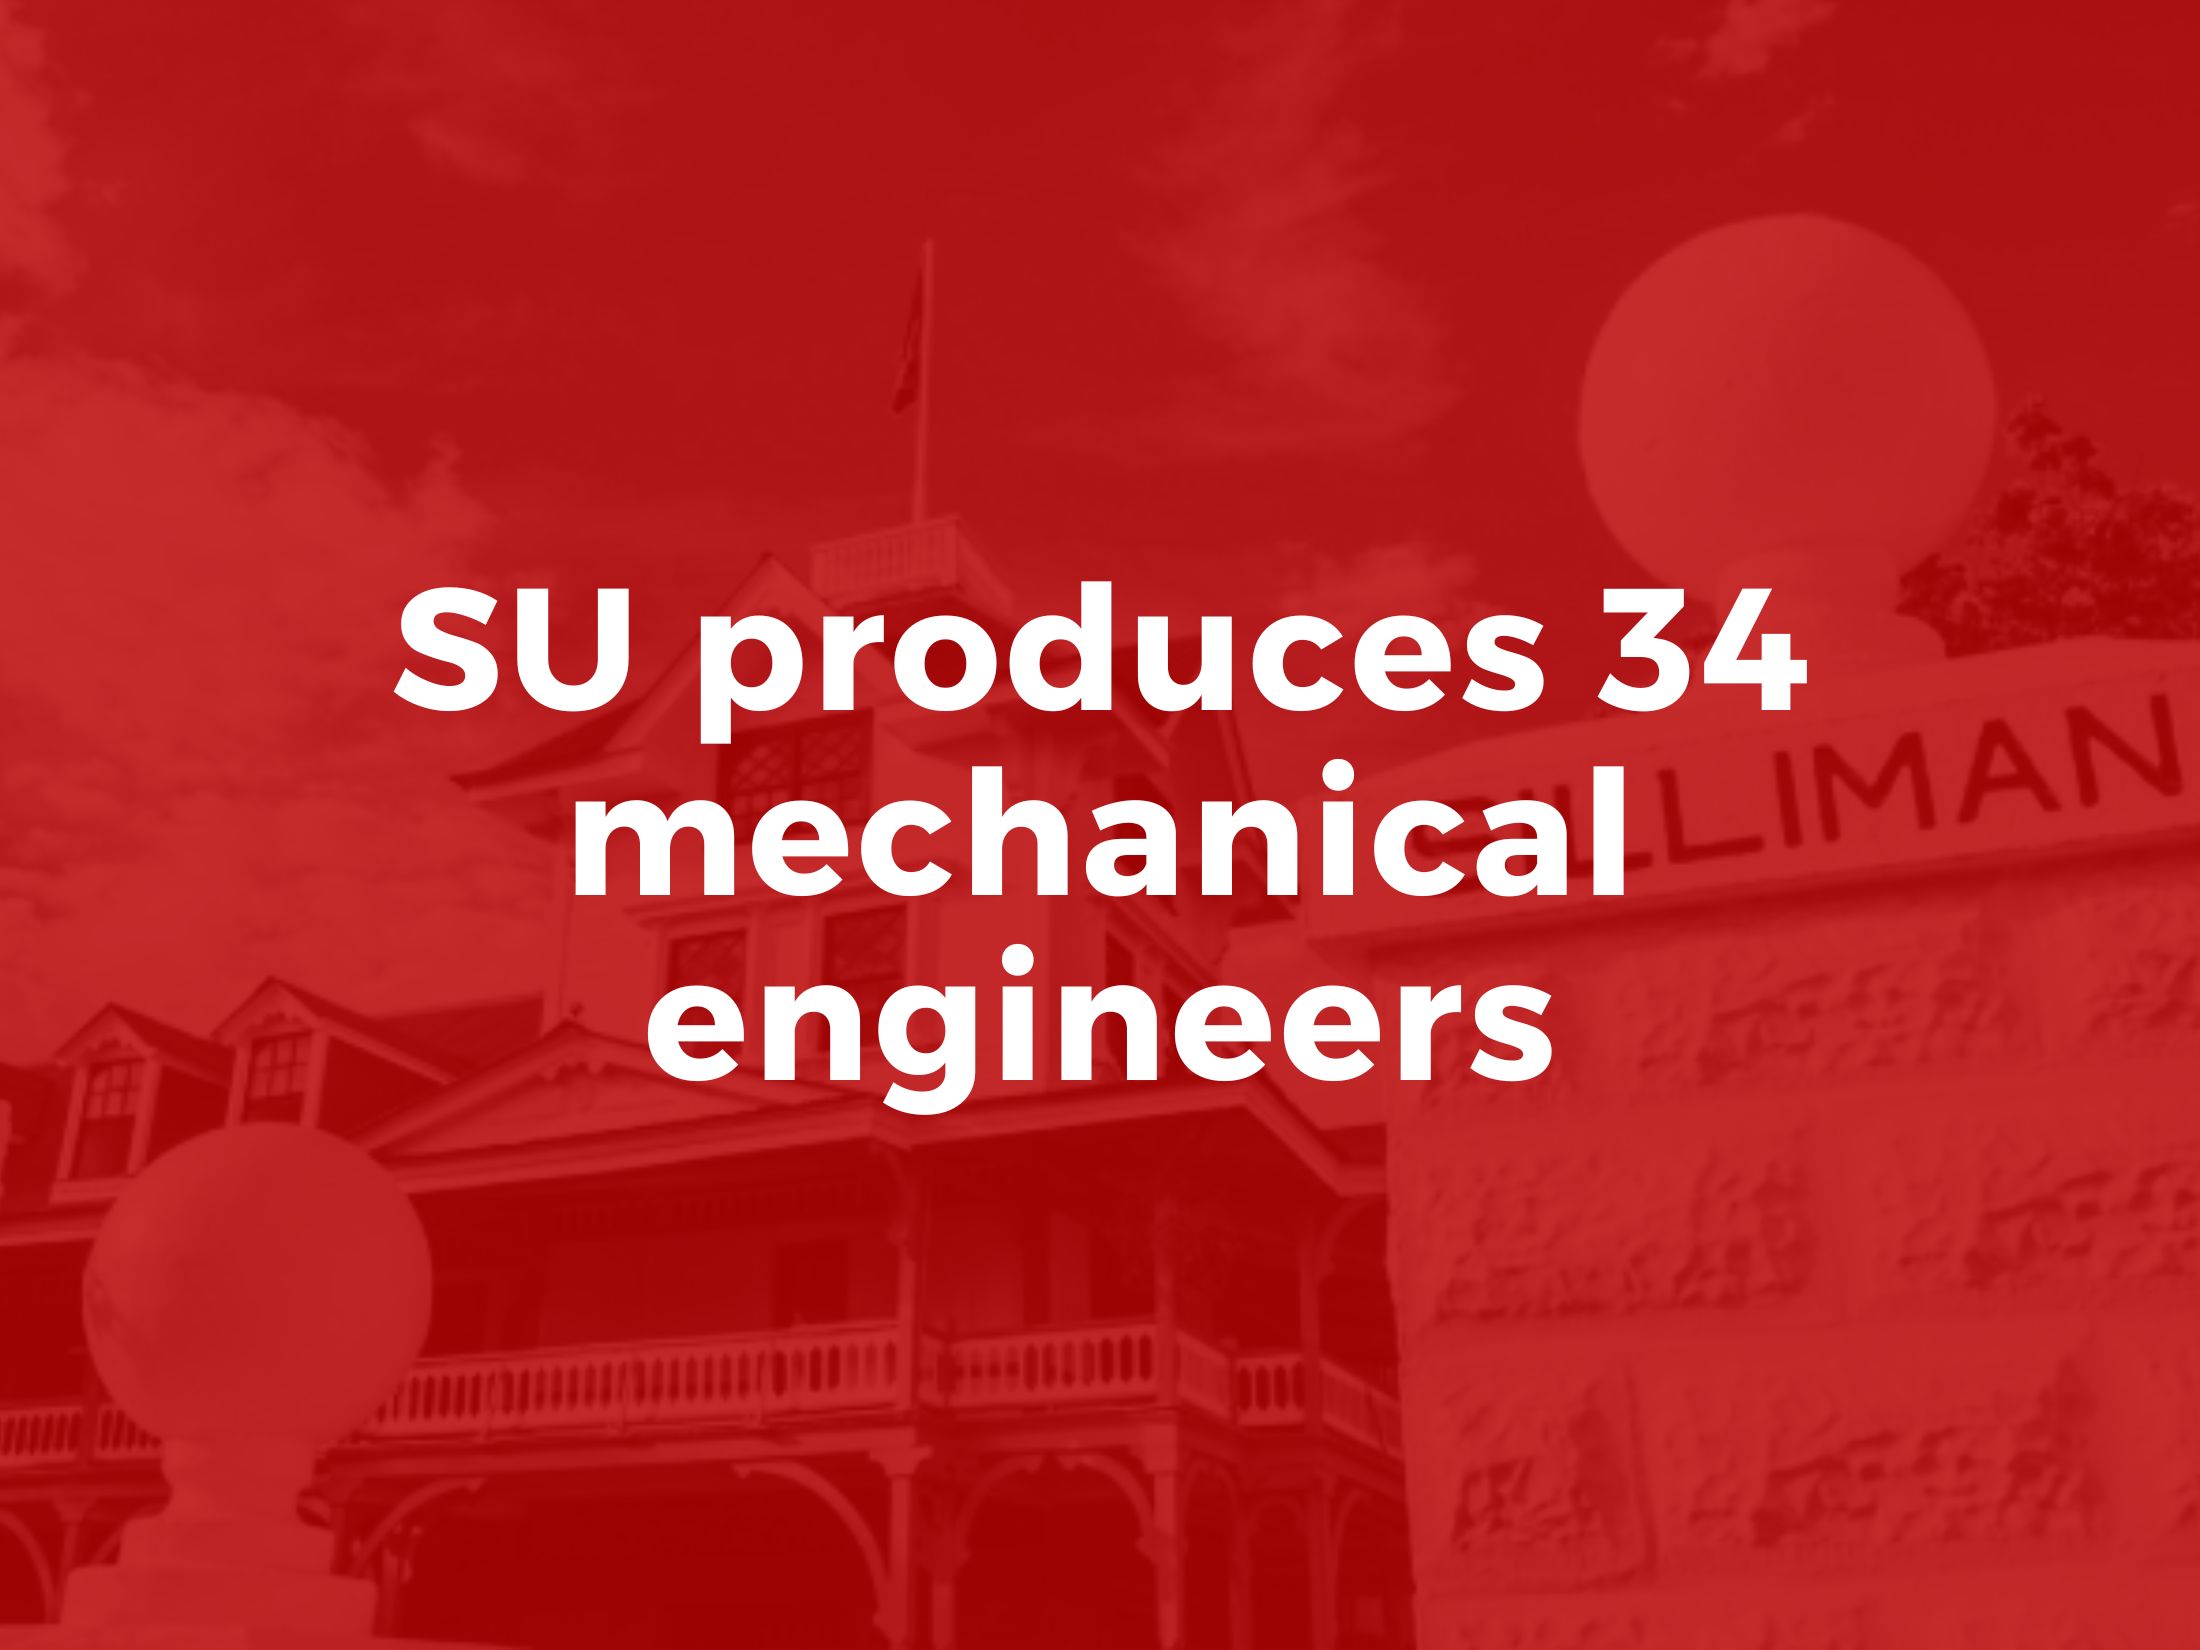 SU produces 34 mechanical engineers